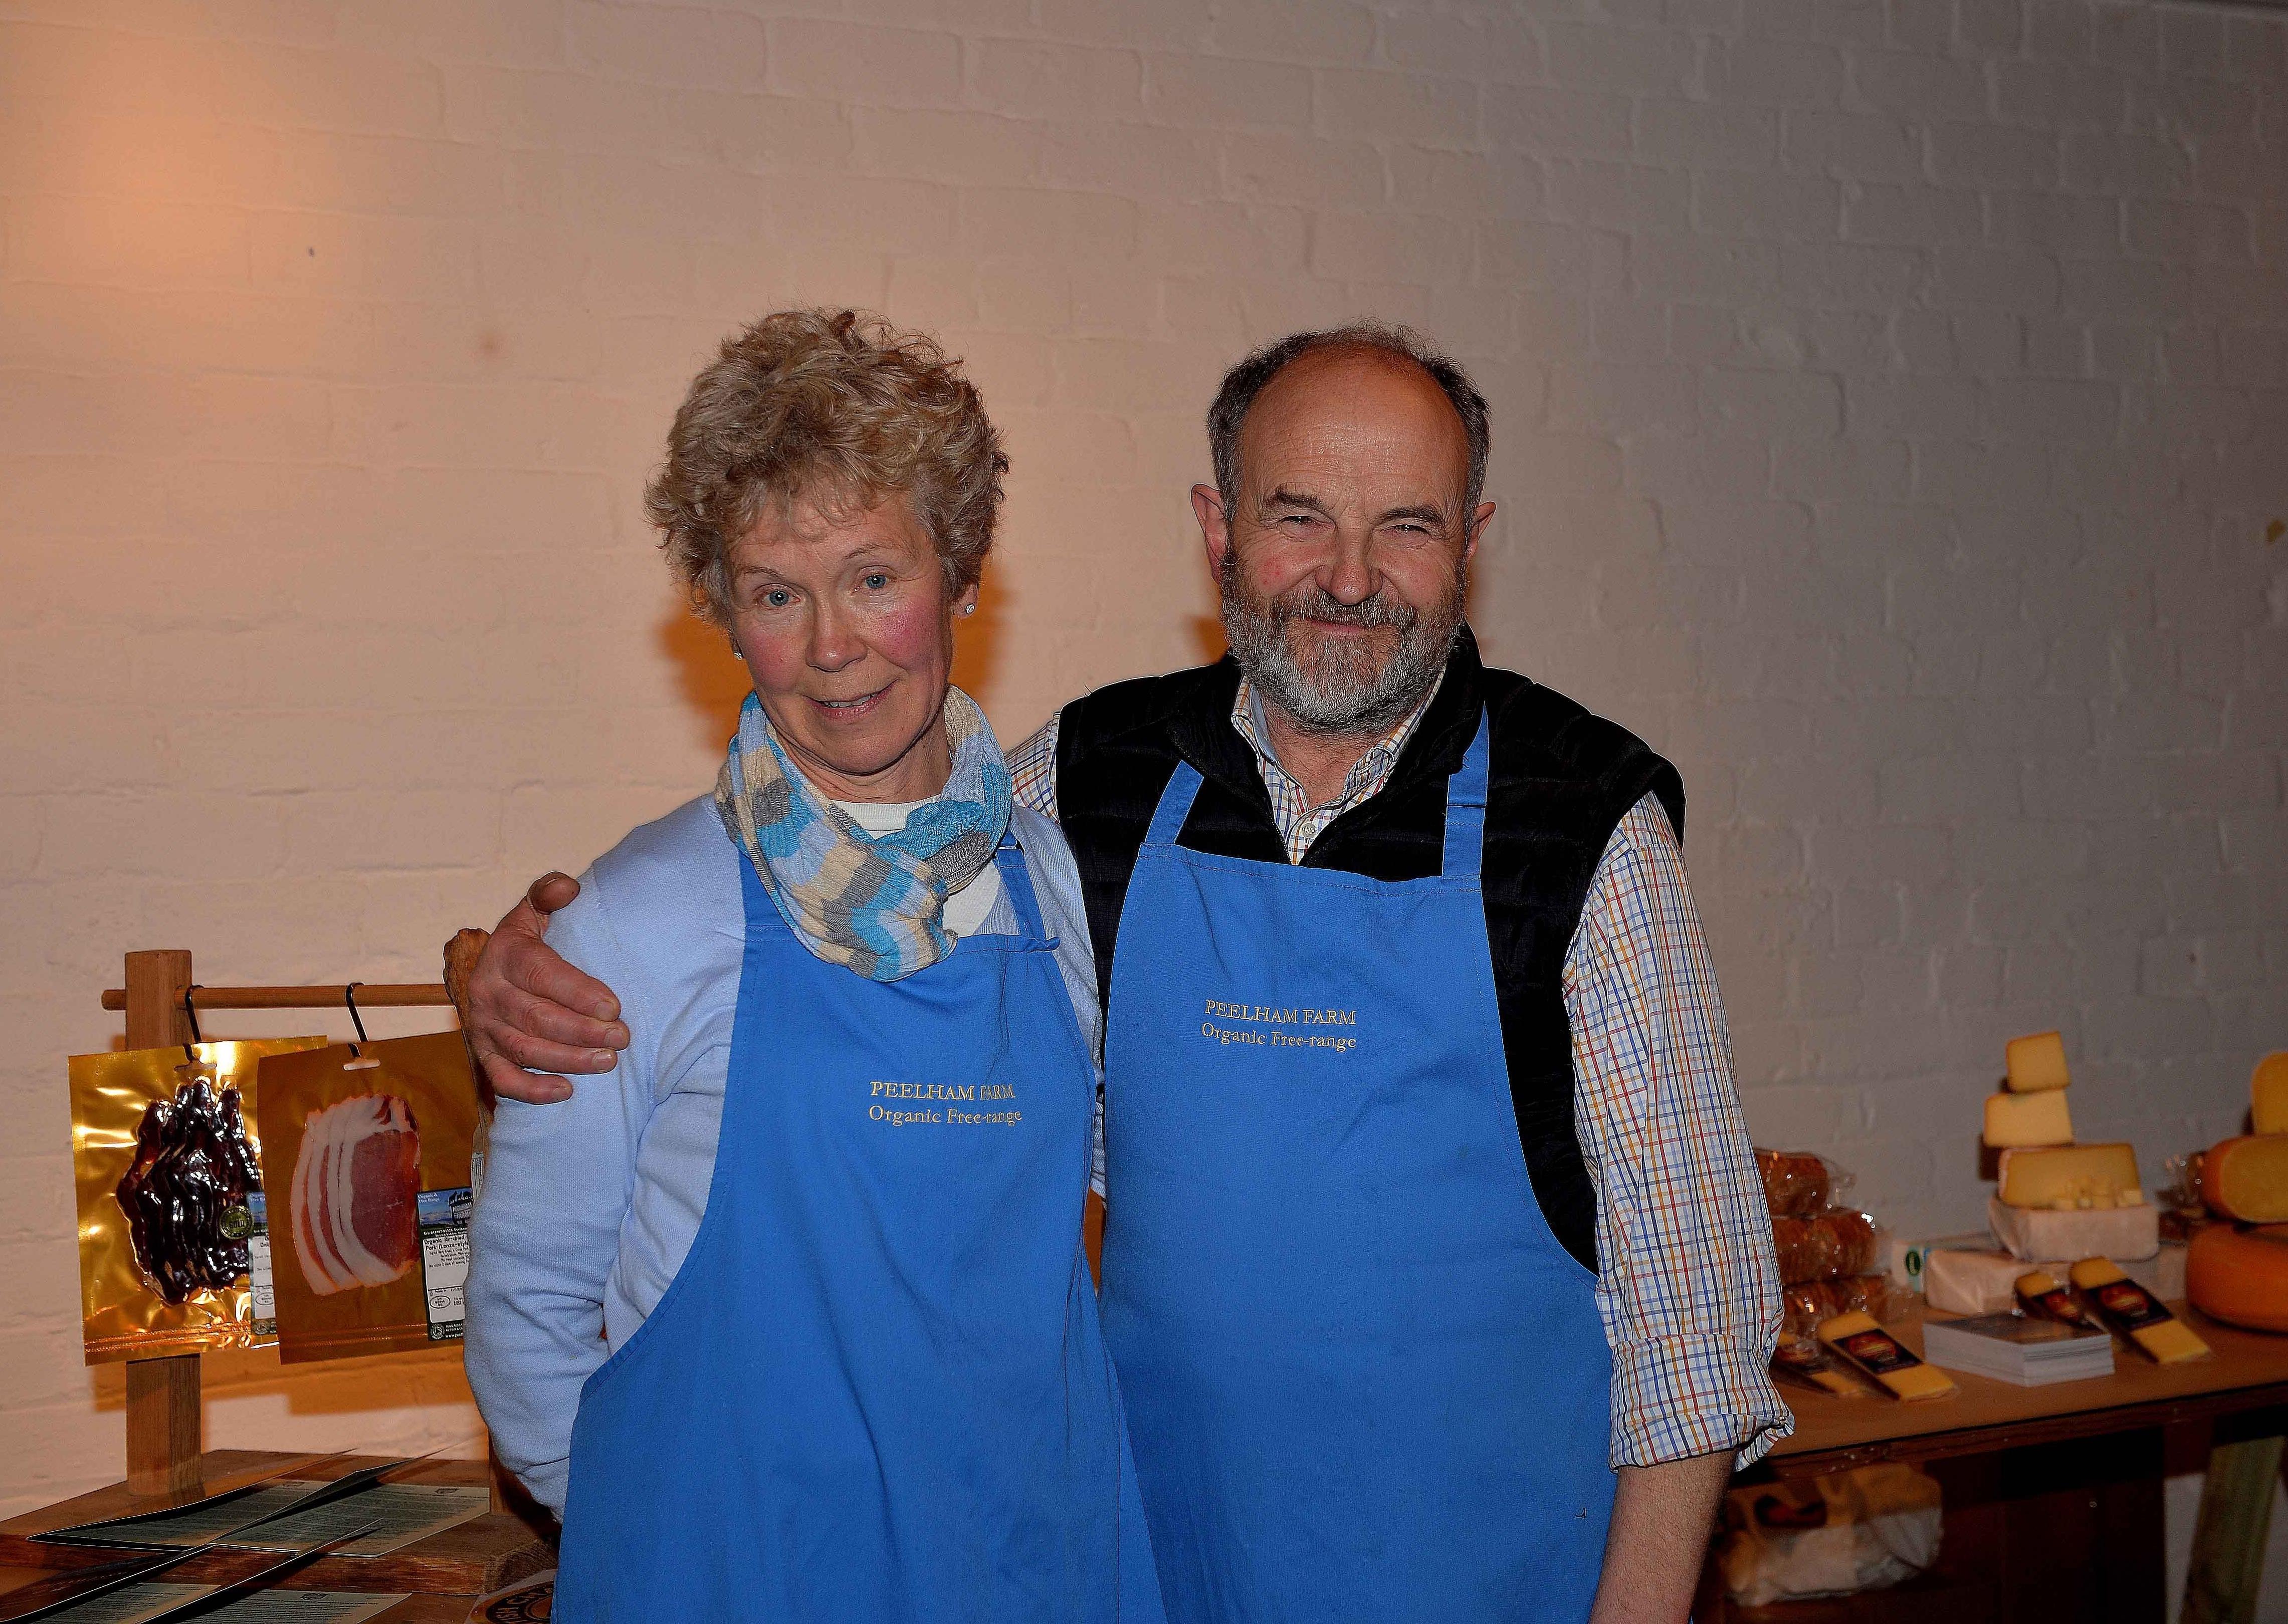 Denise and Chris Walton from Peelham farm.